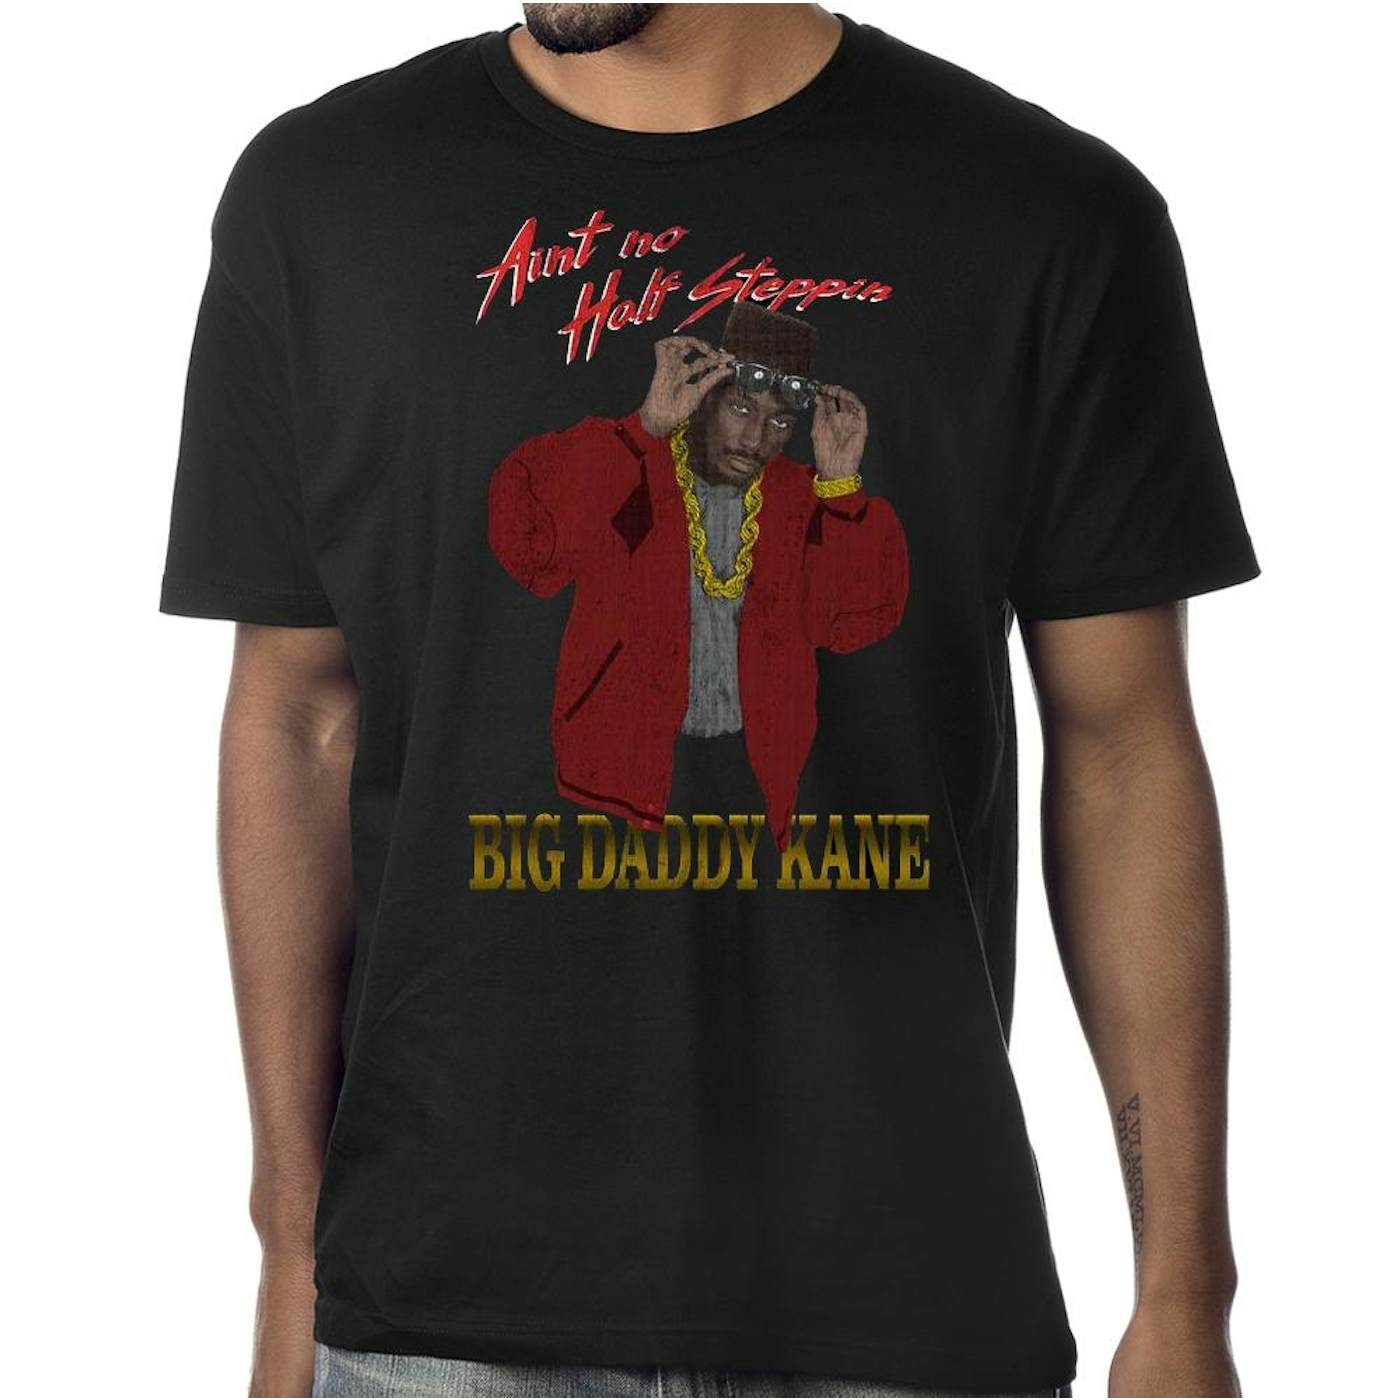 Big Daddy Kane "Ain't No Half Steppin" T-Shirt